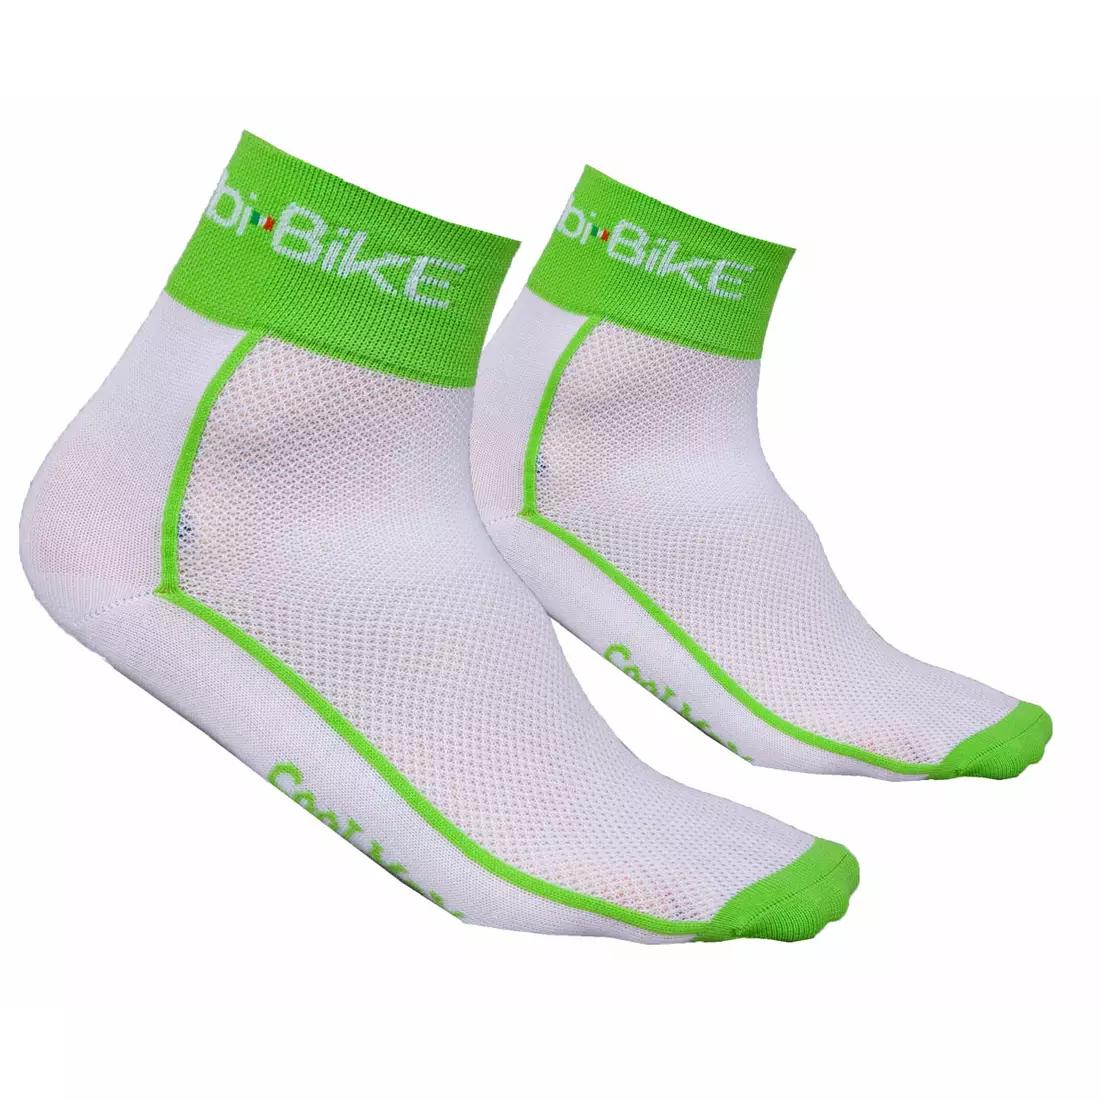 BI-BIKE 511-102 cycling socks